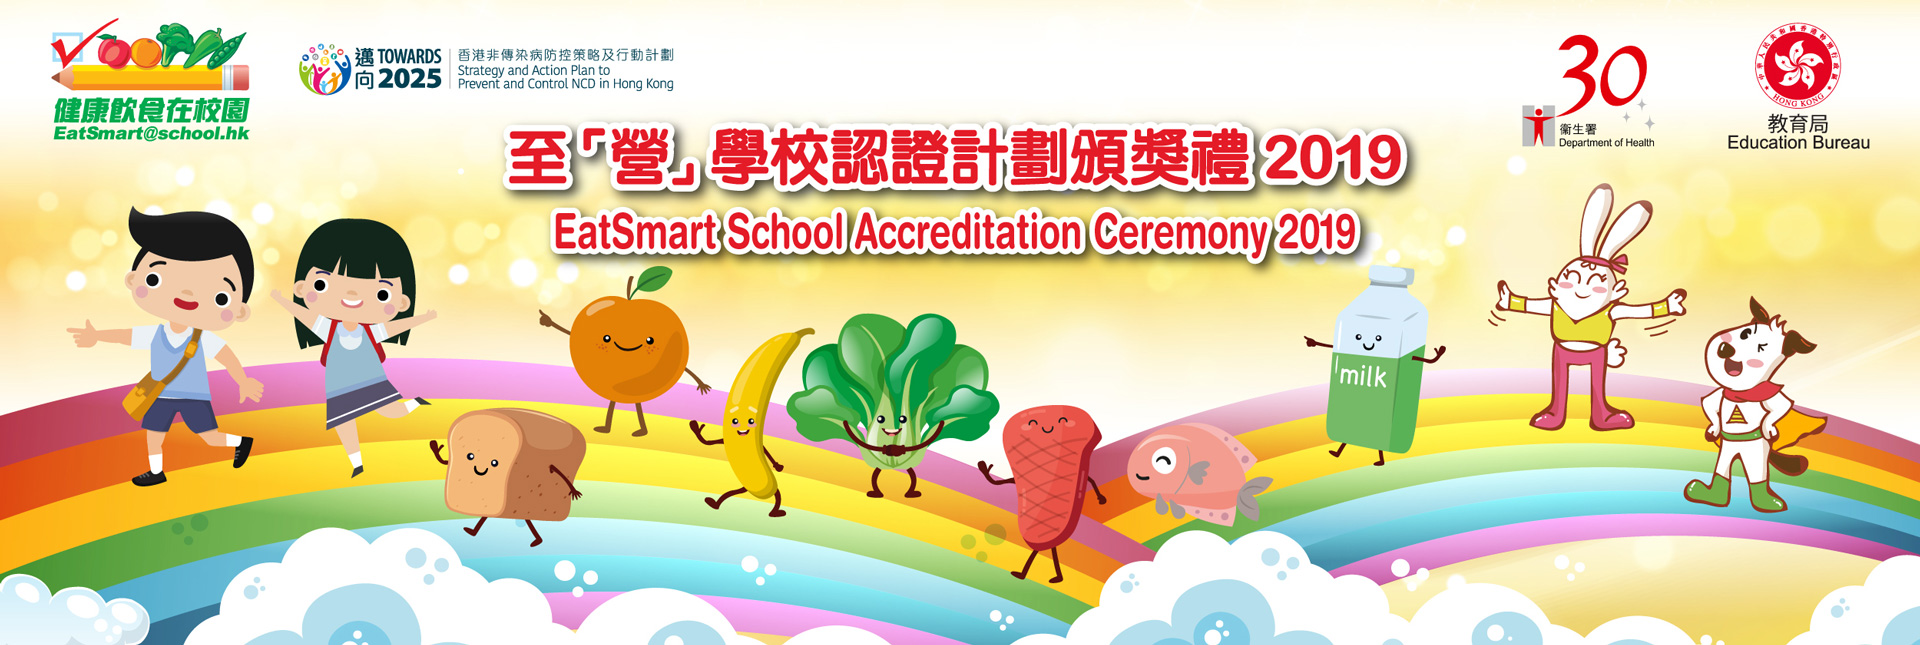 EatSmart School Accreditation Ceremony 2019